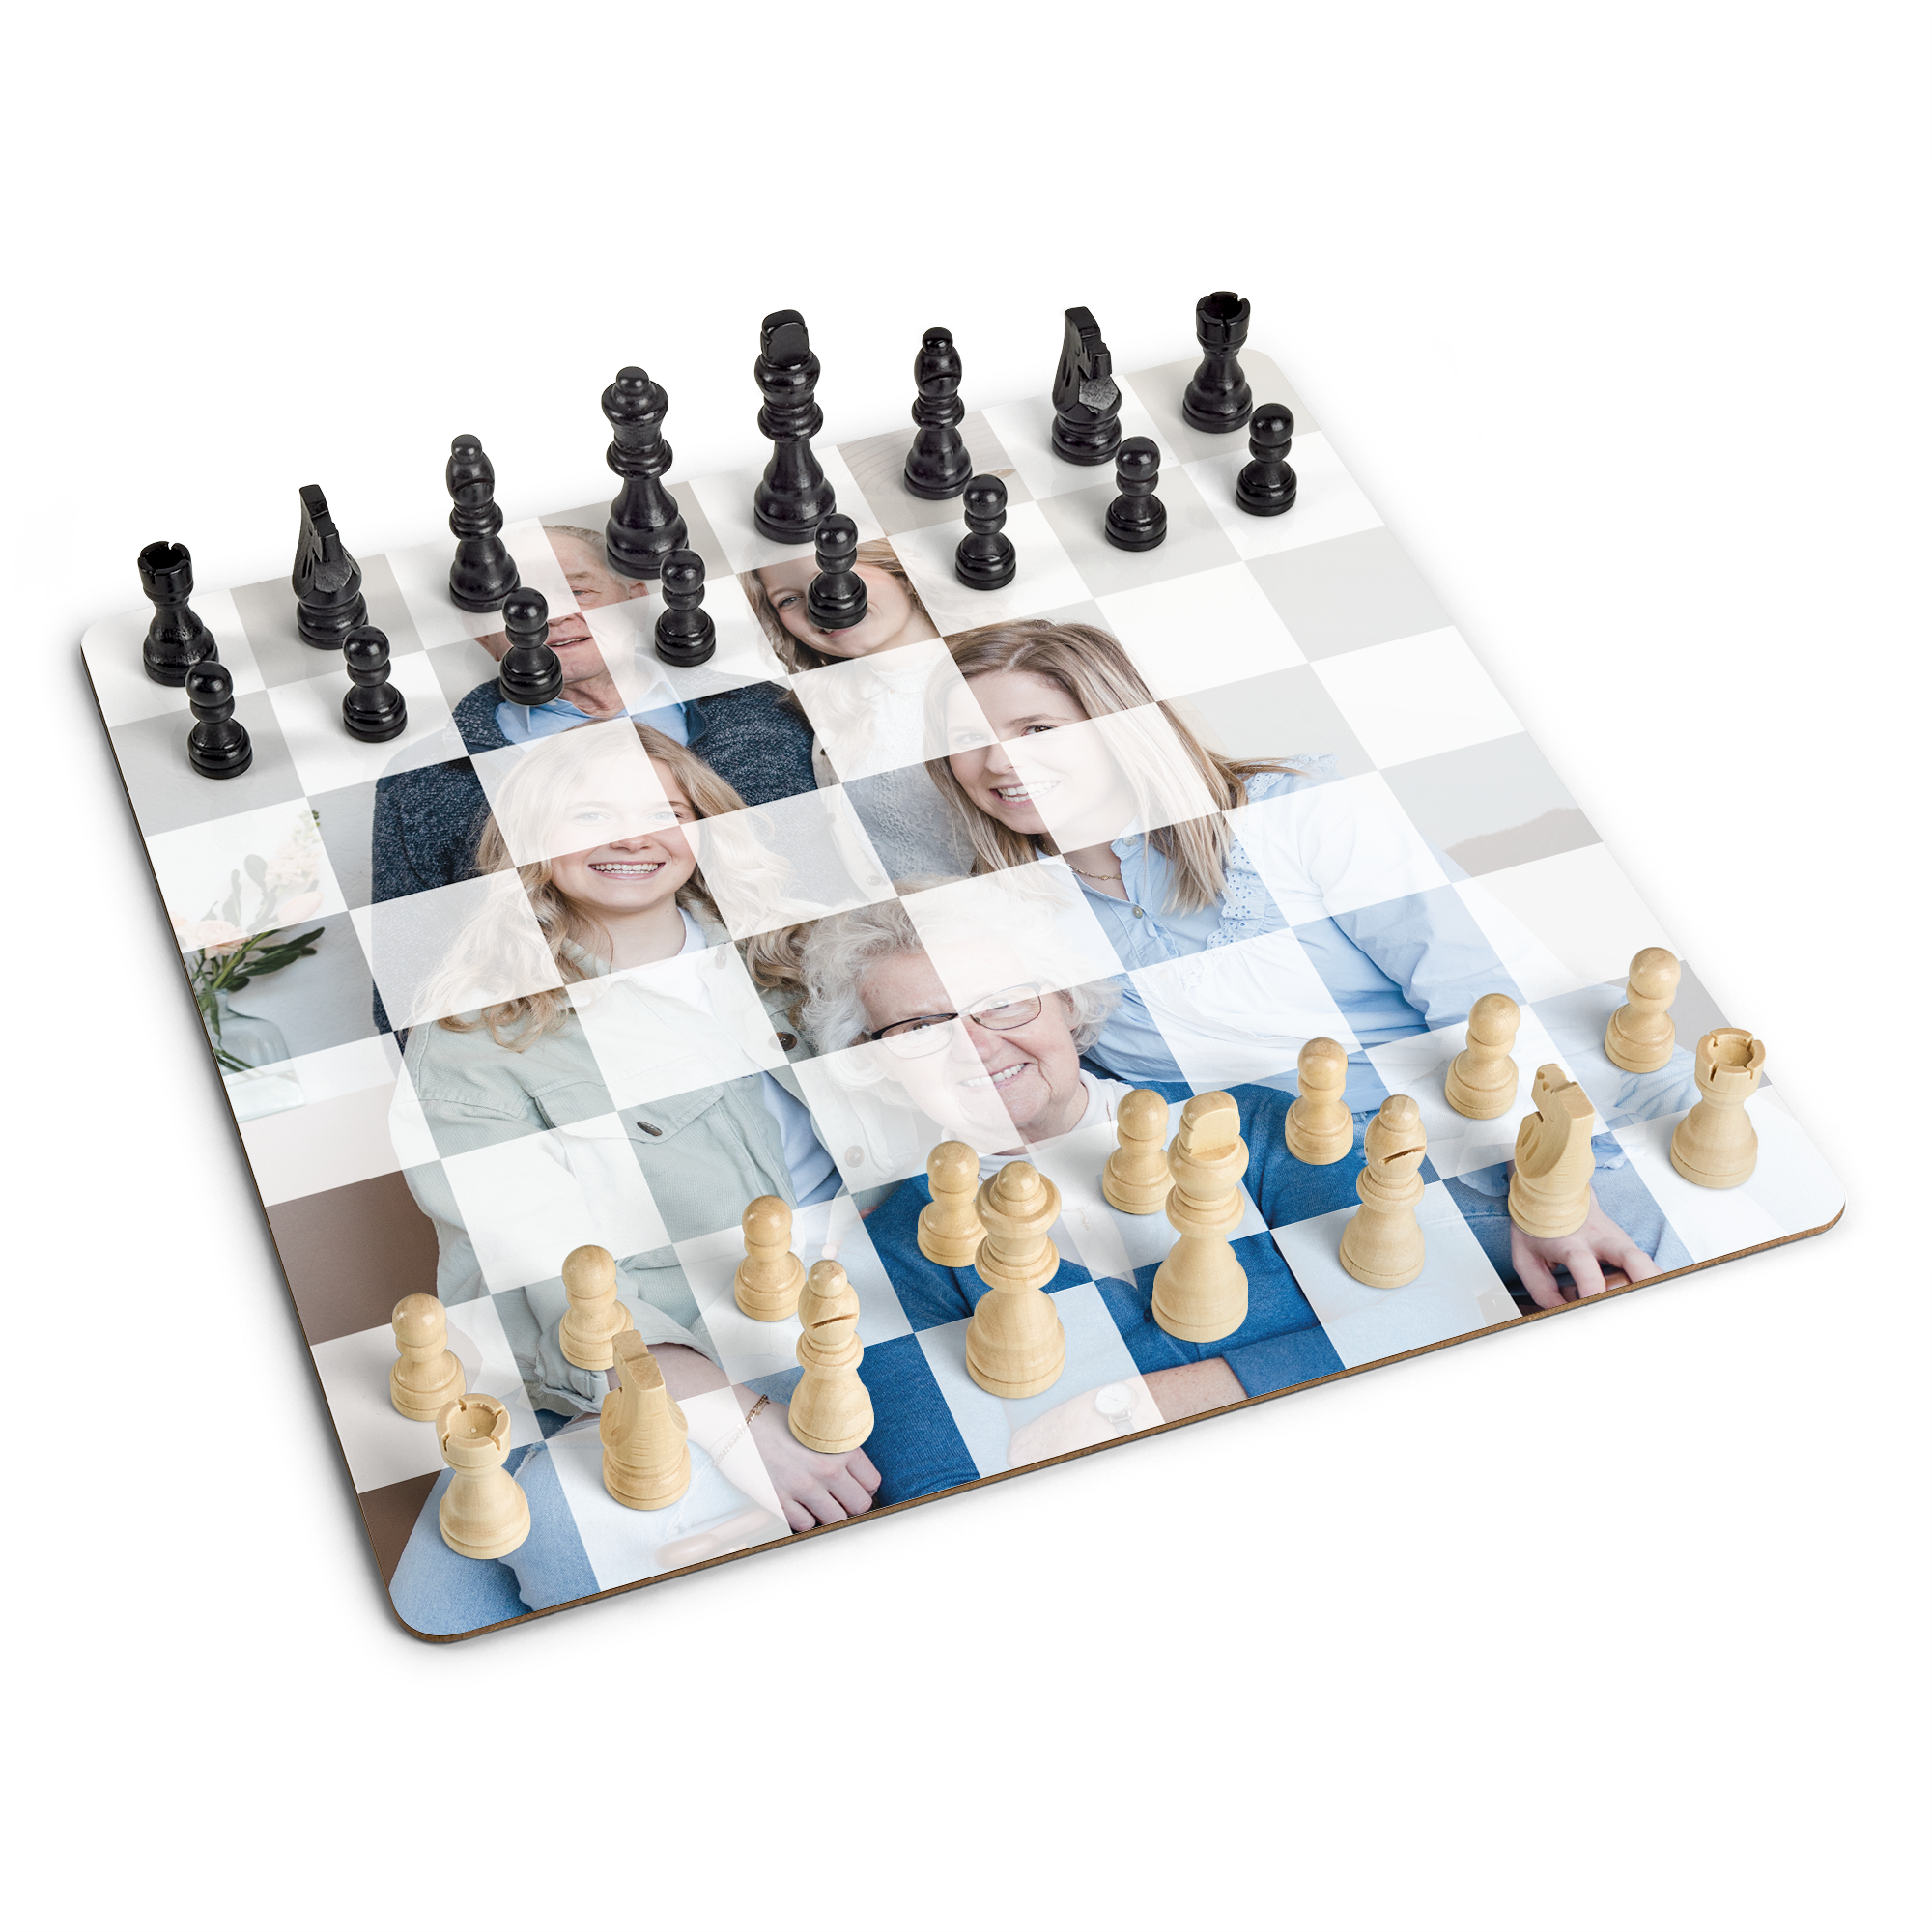 Joc de societate personalizat - Șah